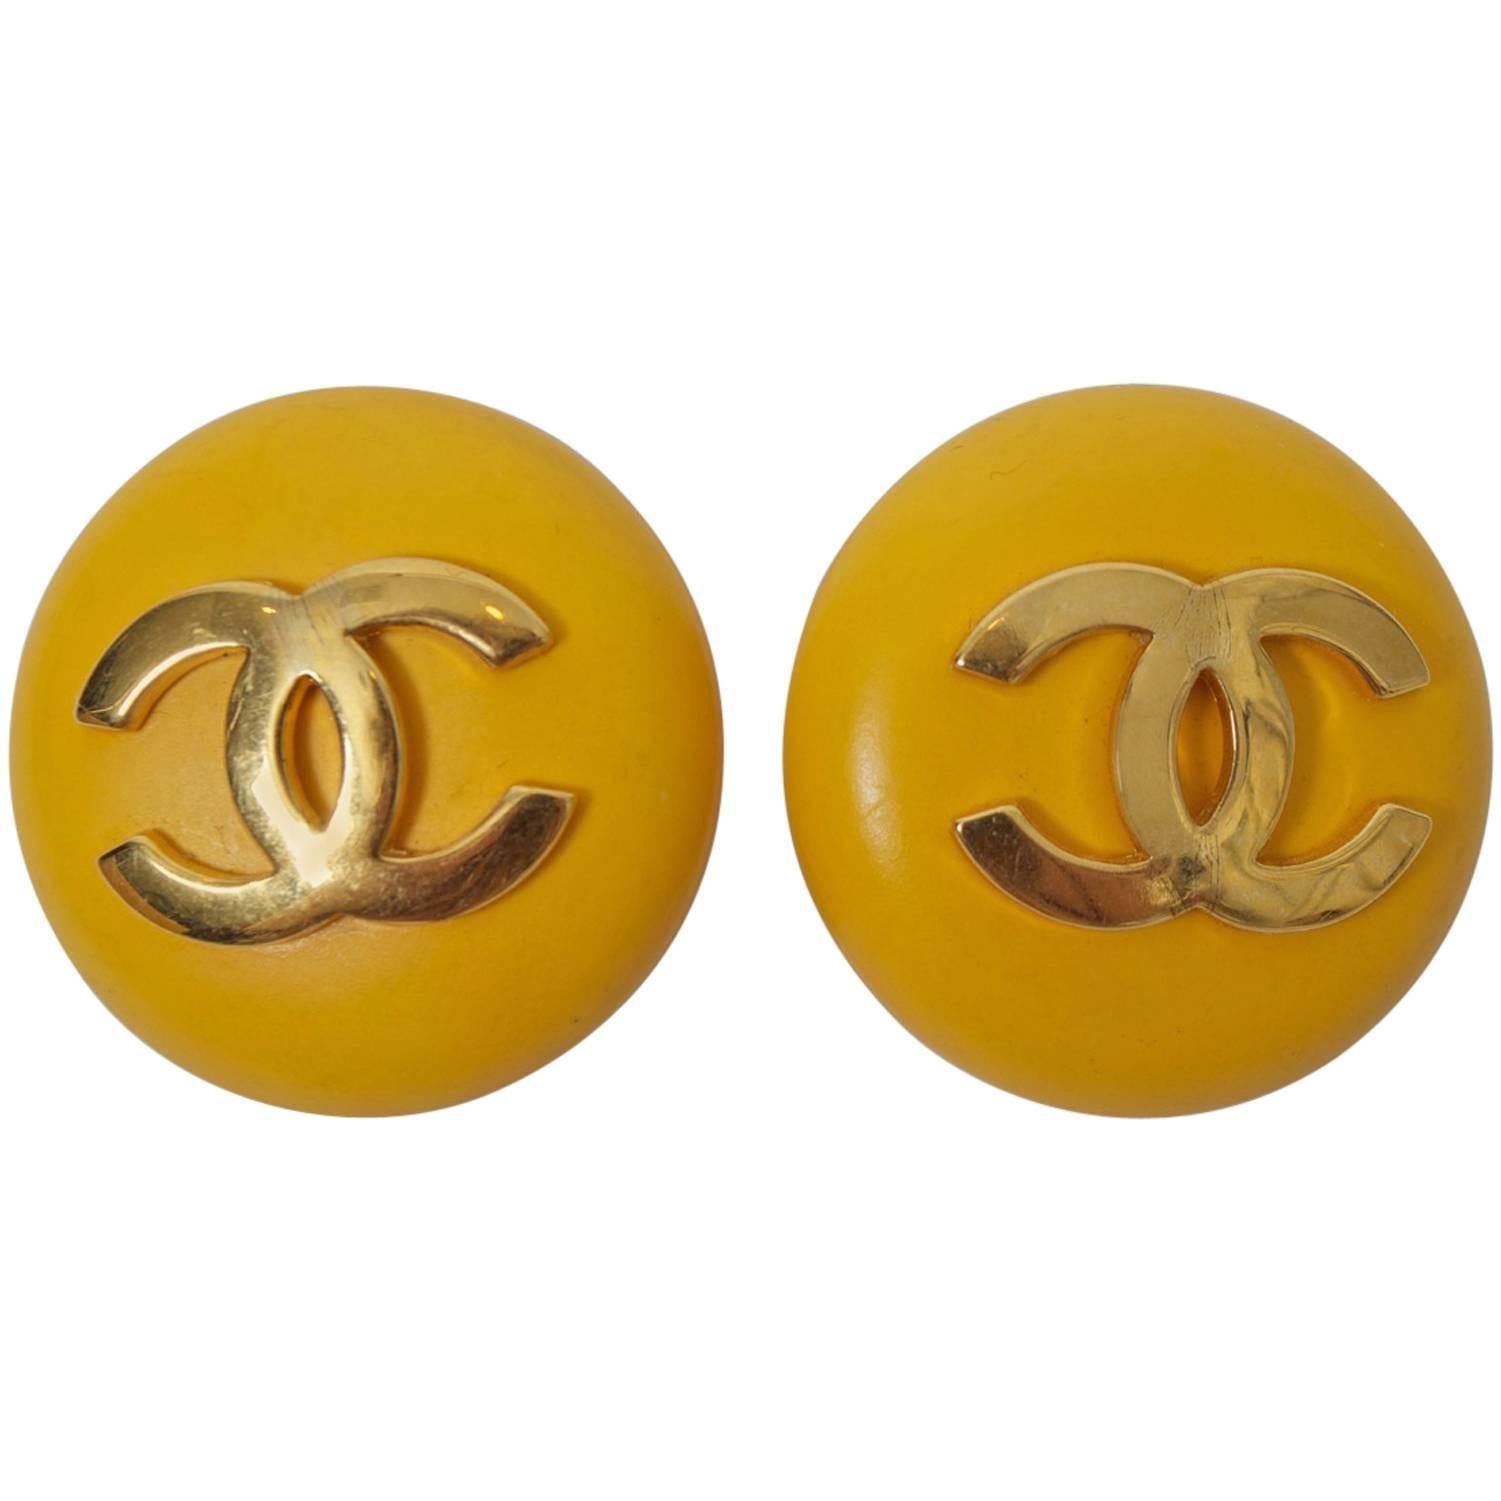 Chanel Yellow Button Earrings